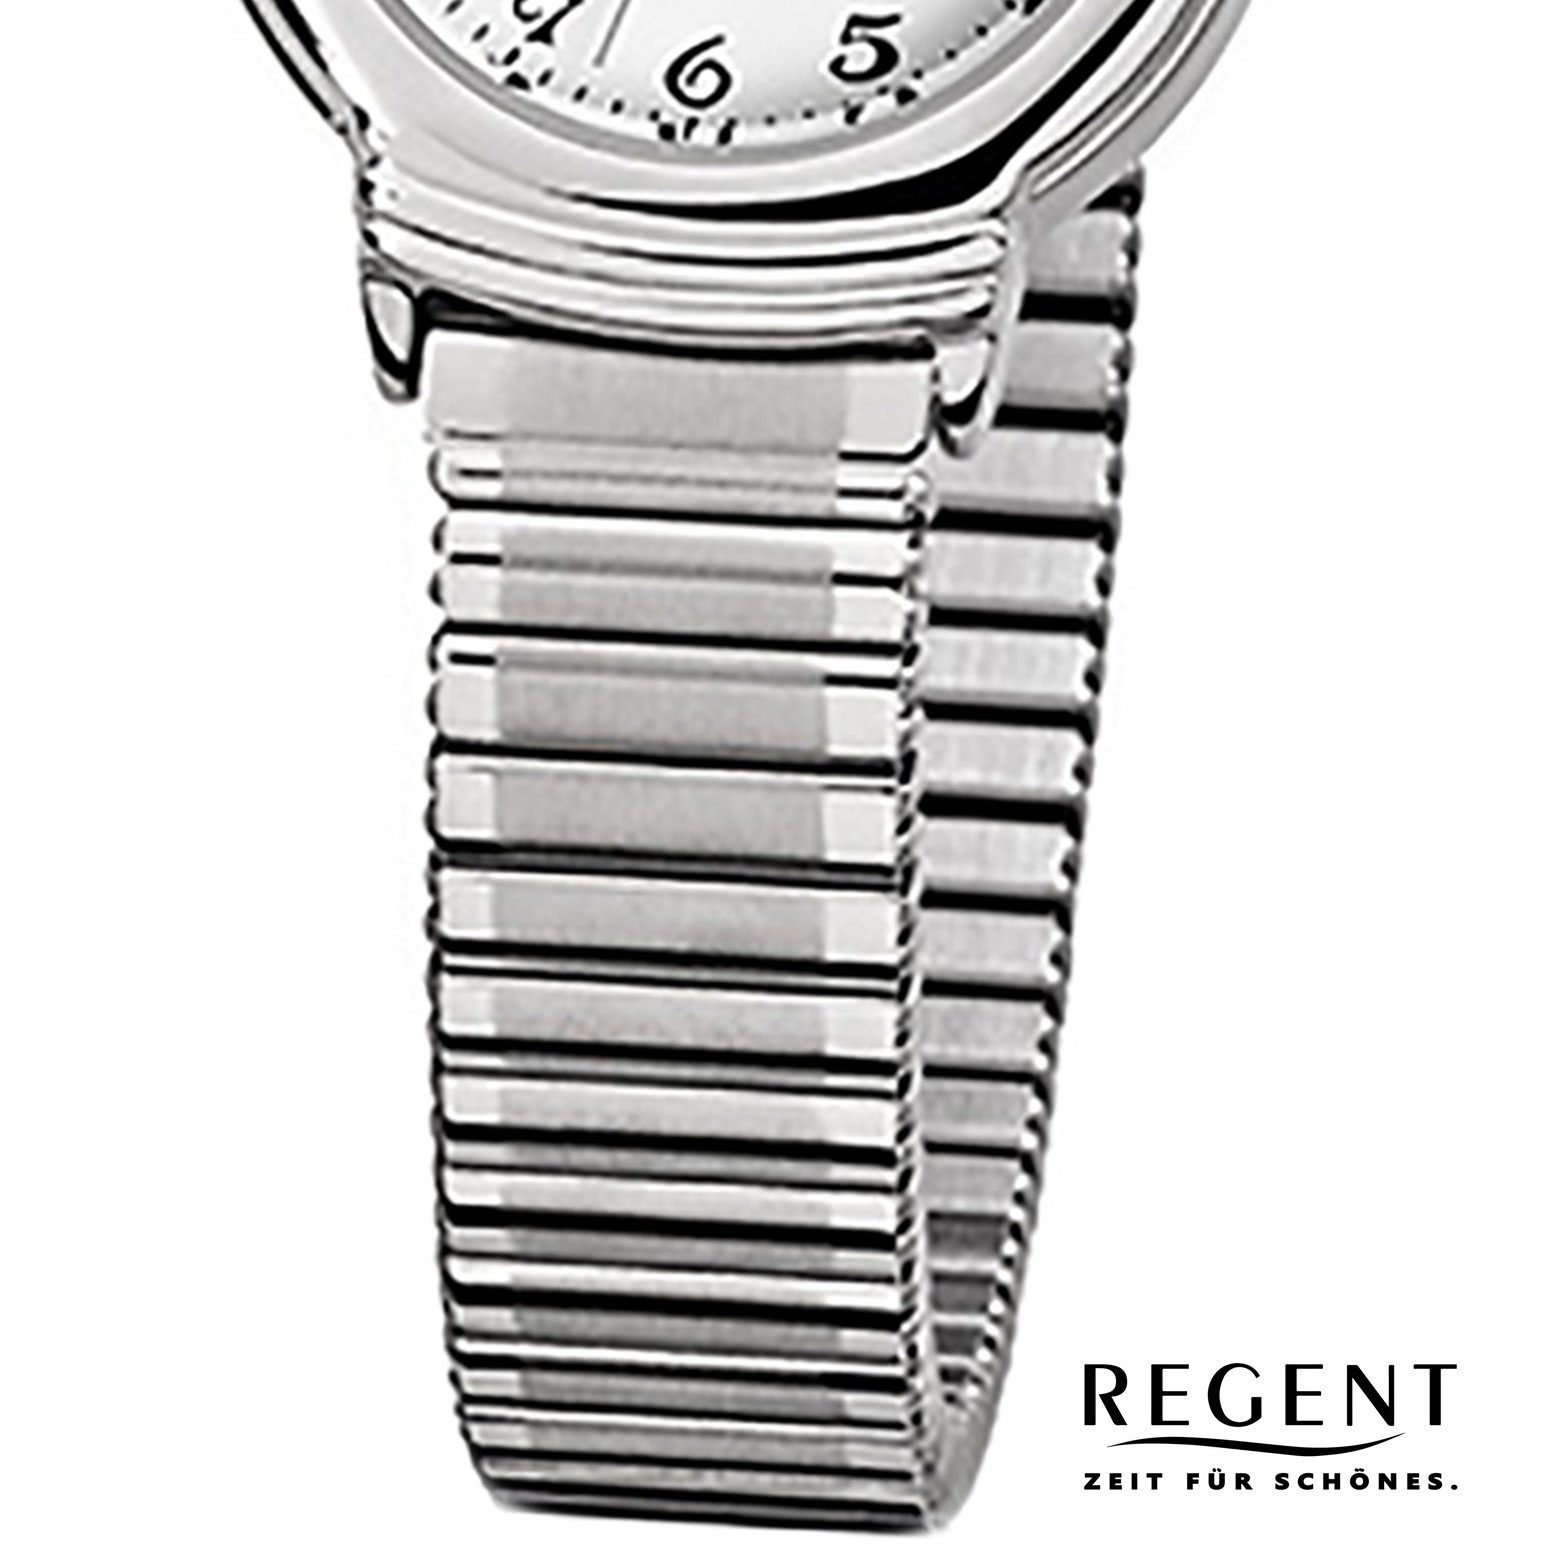 Damen-Armbanduhr (ca. rund, Regent silber Quarzuhr klein Armbanduhr Regent Edelstahlarmband Damen 24mm), F-264, Analog